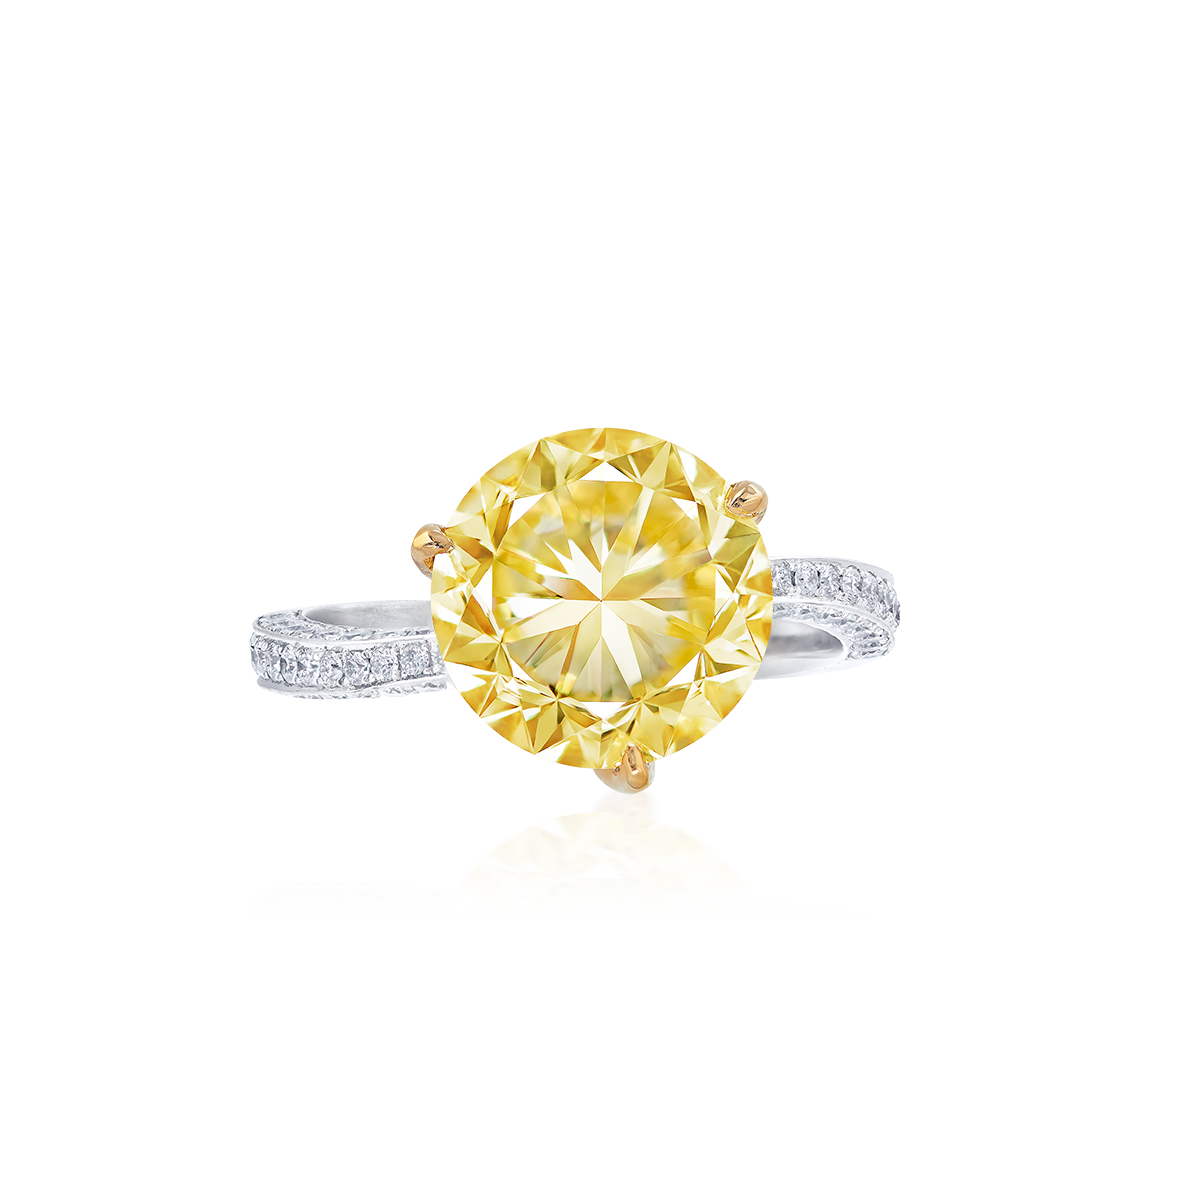 阿波羅之冠 濃彩黃鑽鑽戒 4.15 克拉
Fancy Intense Yellow Colored 
Diamond and Diamond Ring